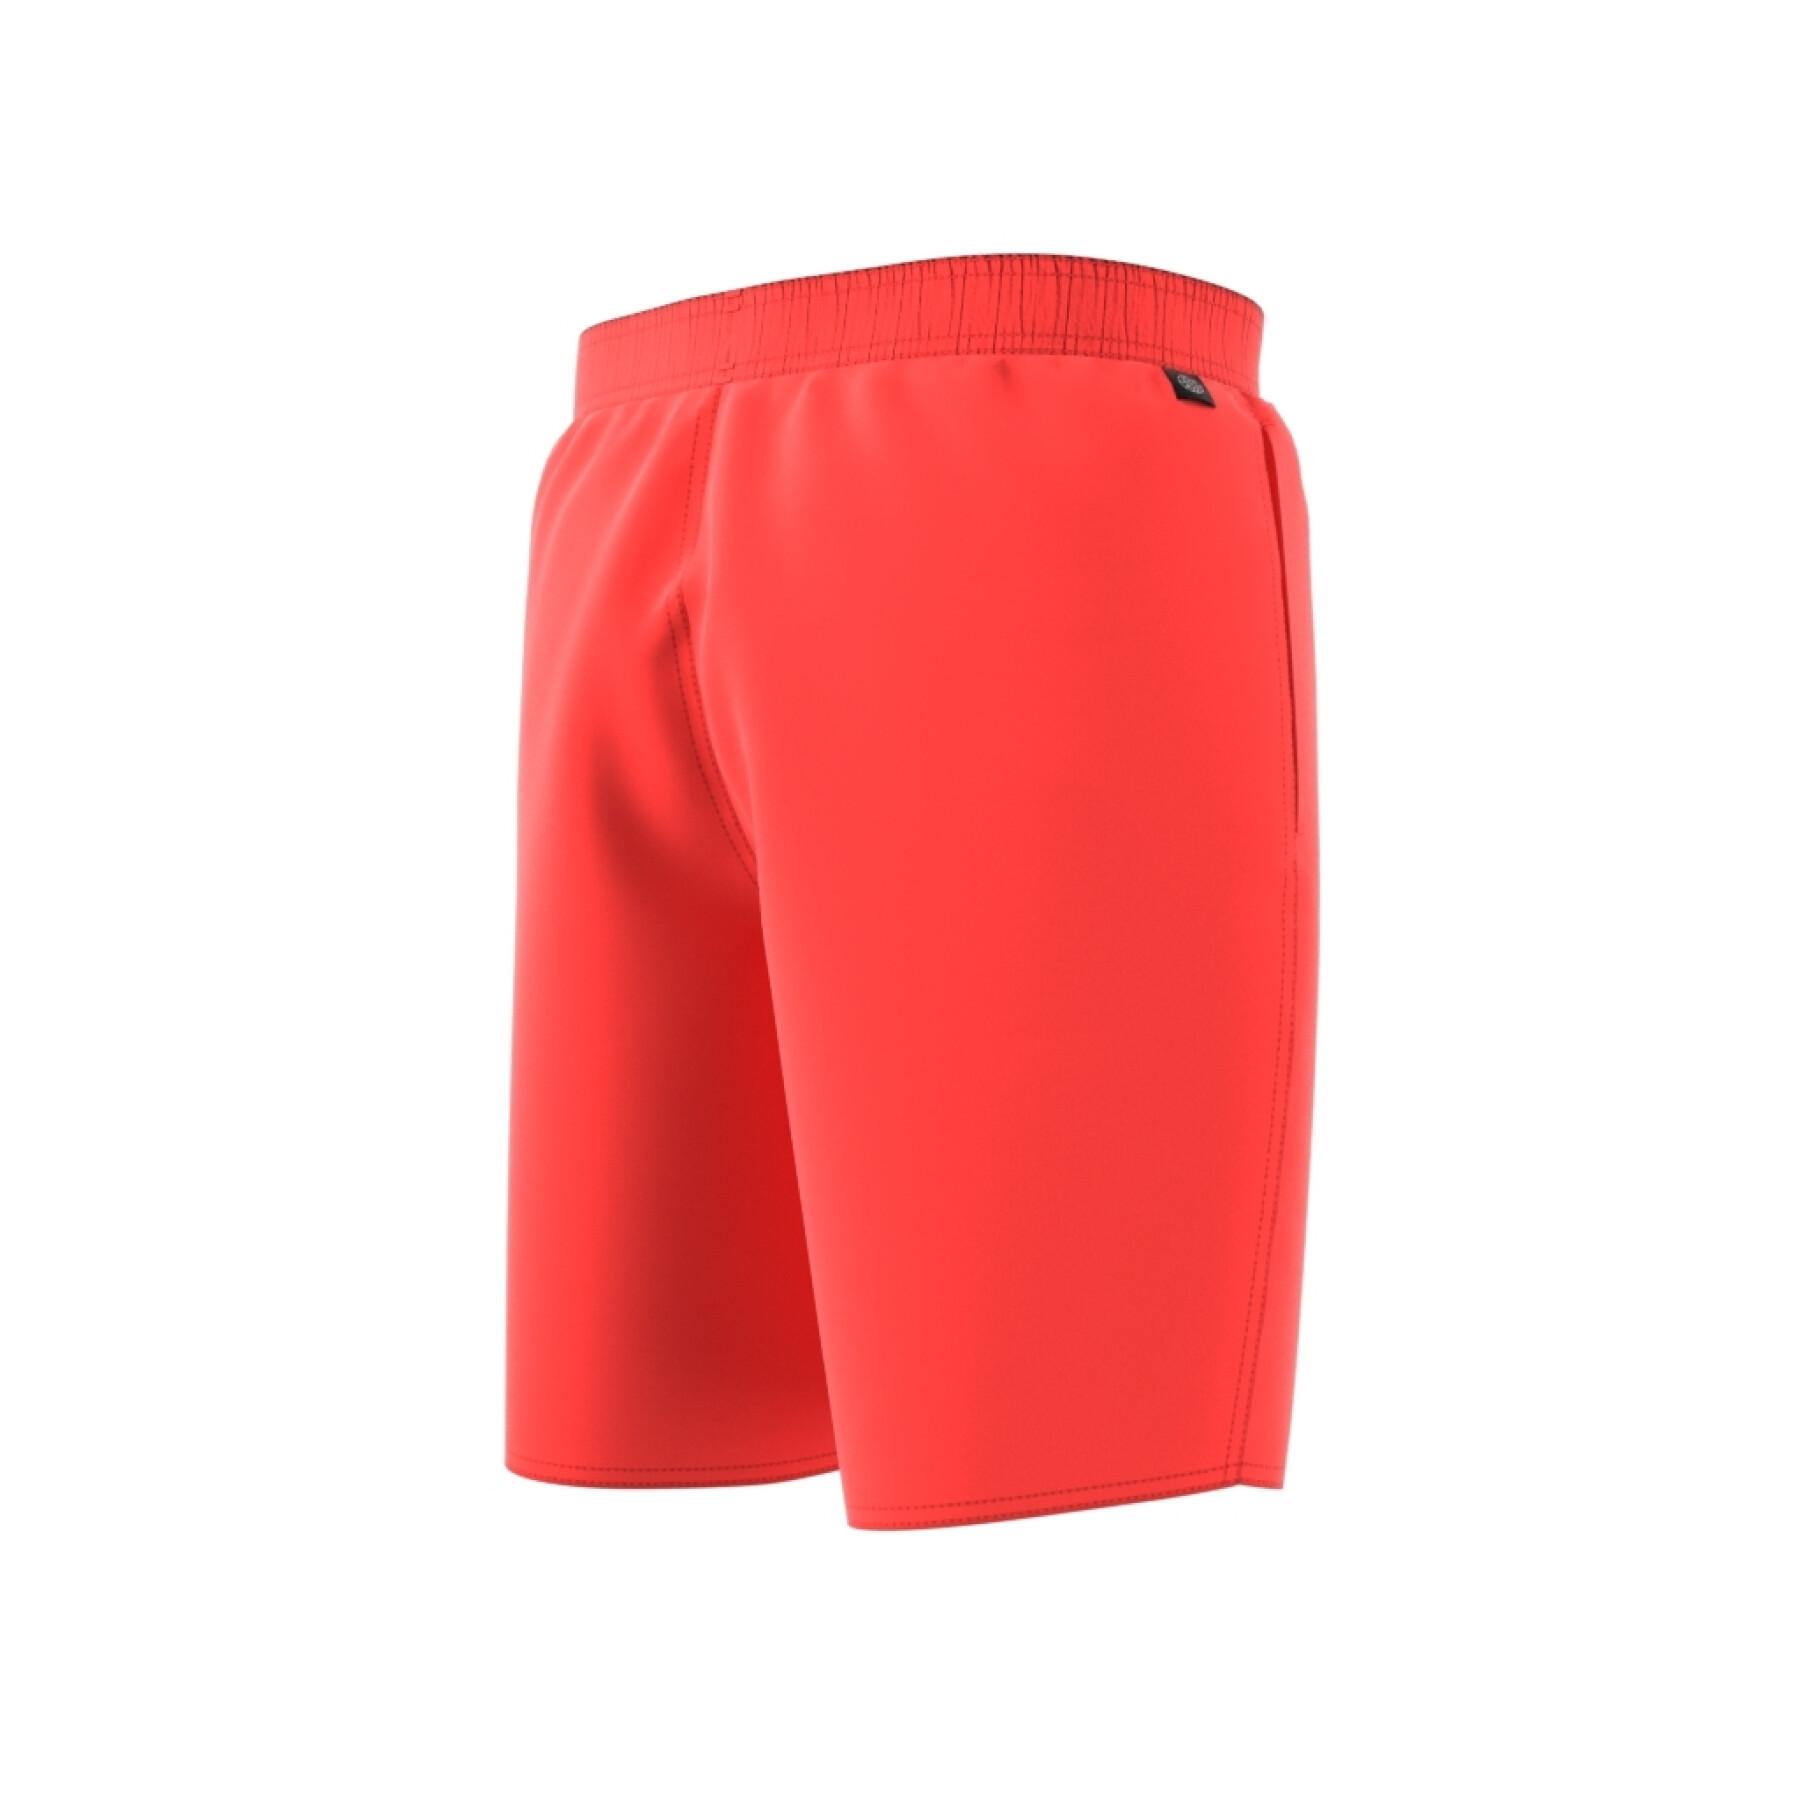 Classic length plain swim shorts adidas